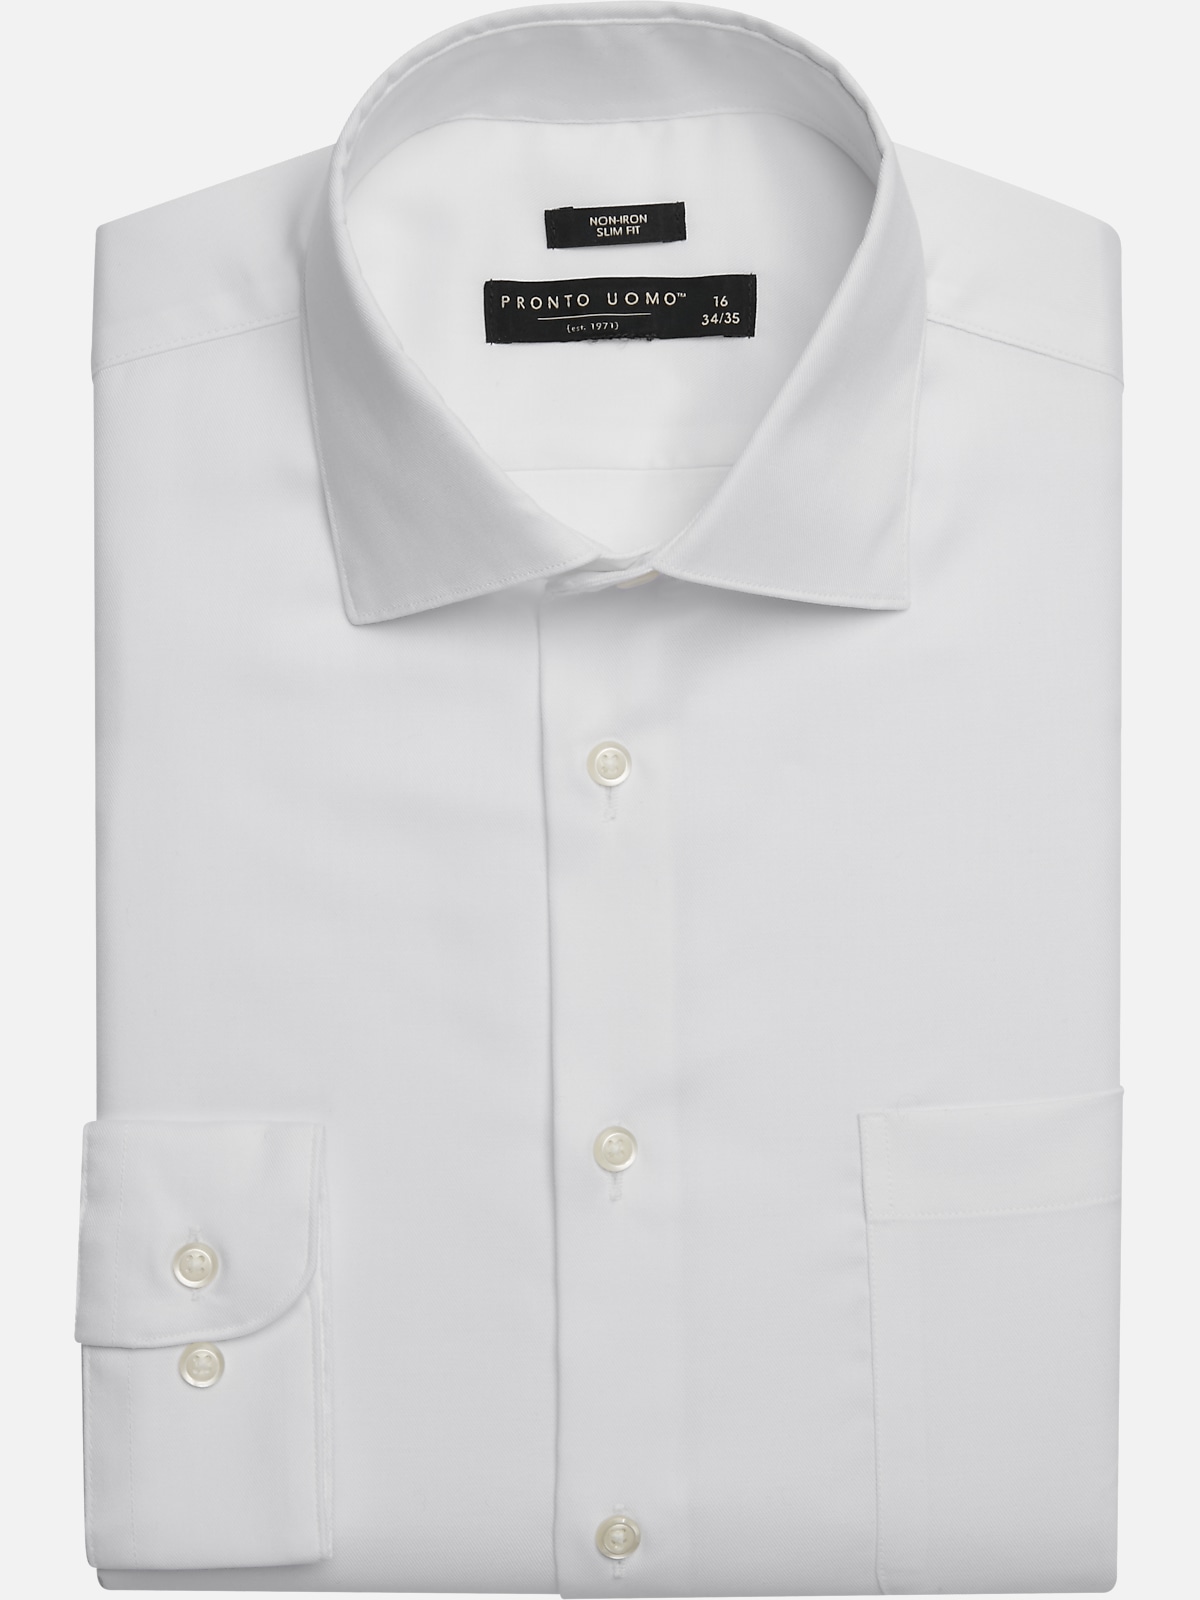 Pronto Uomo Slim Fit Spread Collar Dress Shirt | Clearance Dress Shirts ...